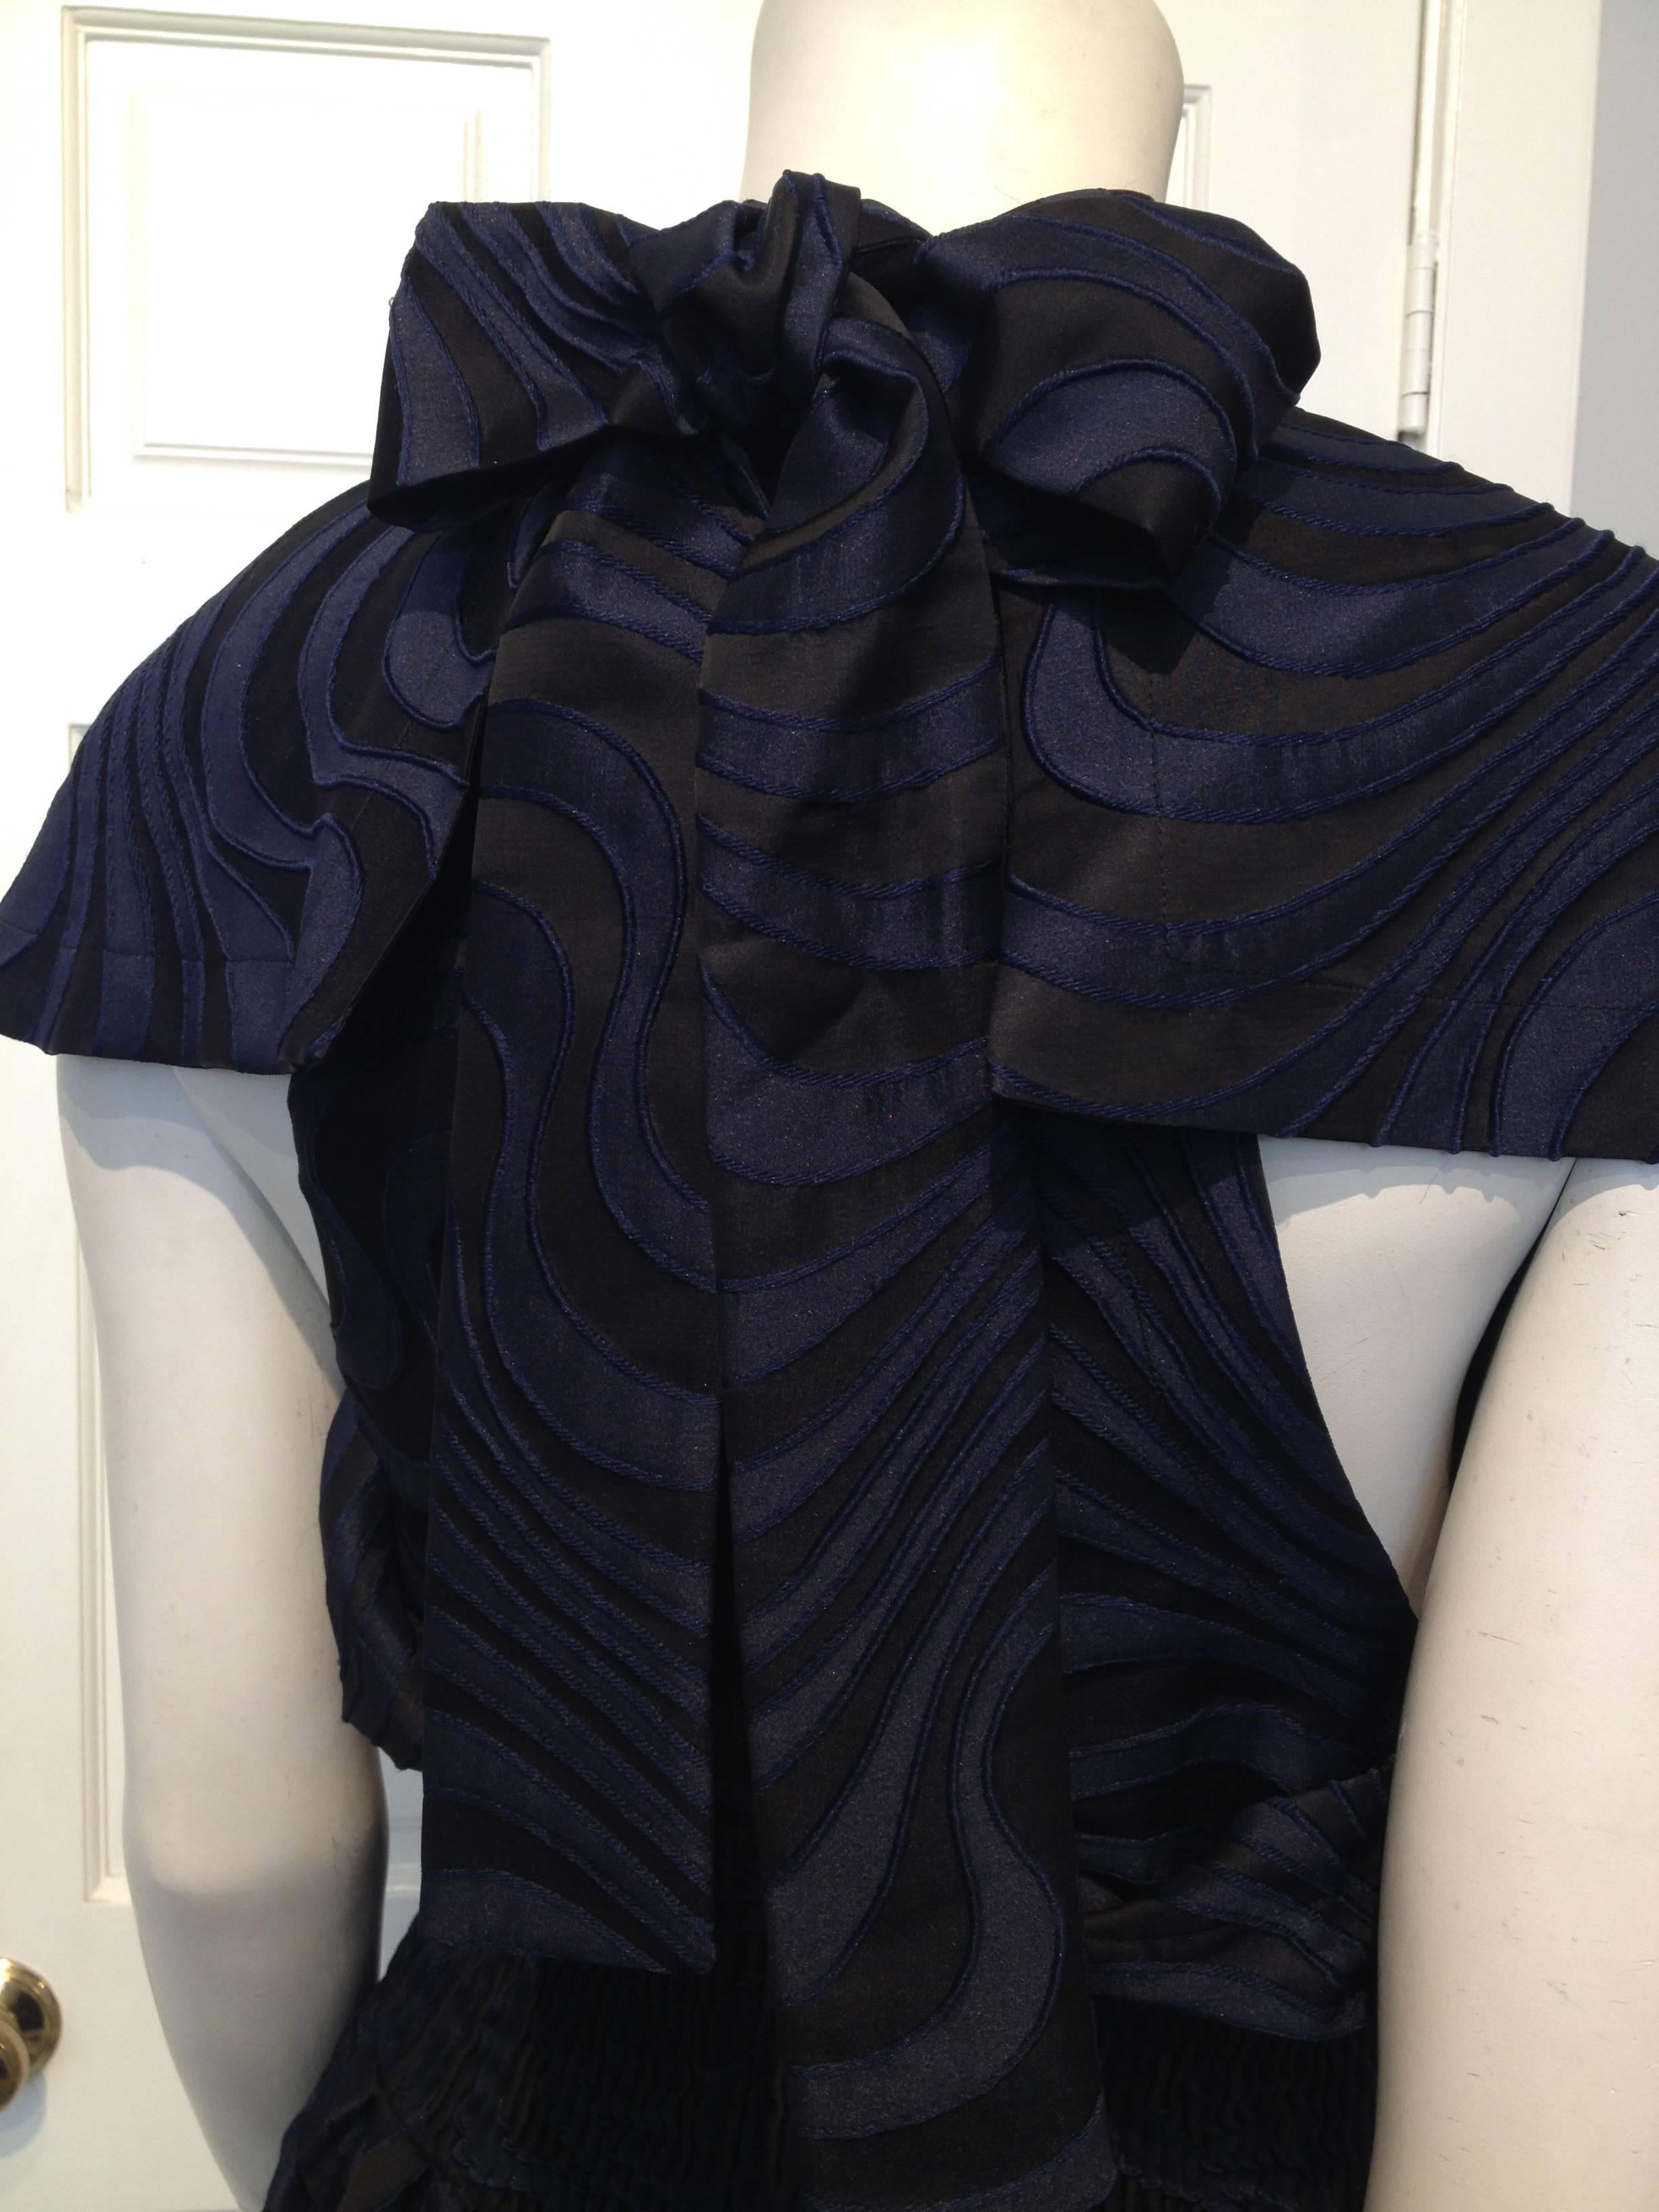 Vionnet Navy and Black Swirled Dress Size 44 (8) 3